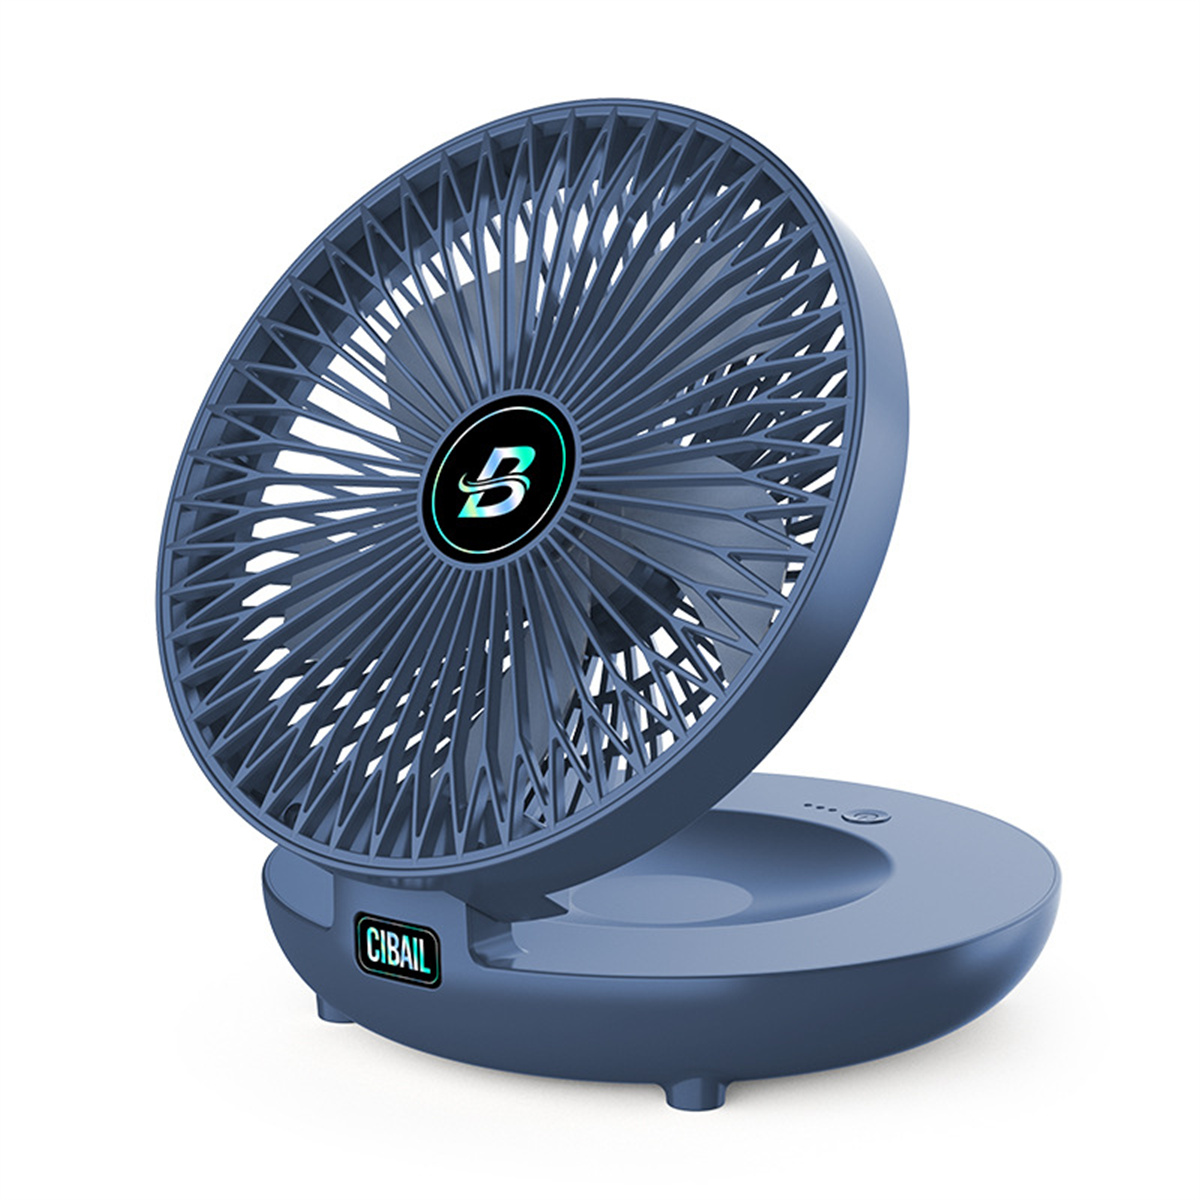 SYNTEK Fan blau stumm USB Ventilator wiederaufladbar Blau Desktop Mini hohe tragbar Hause Wind Schlafsaal